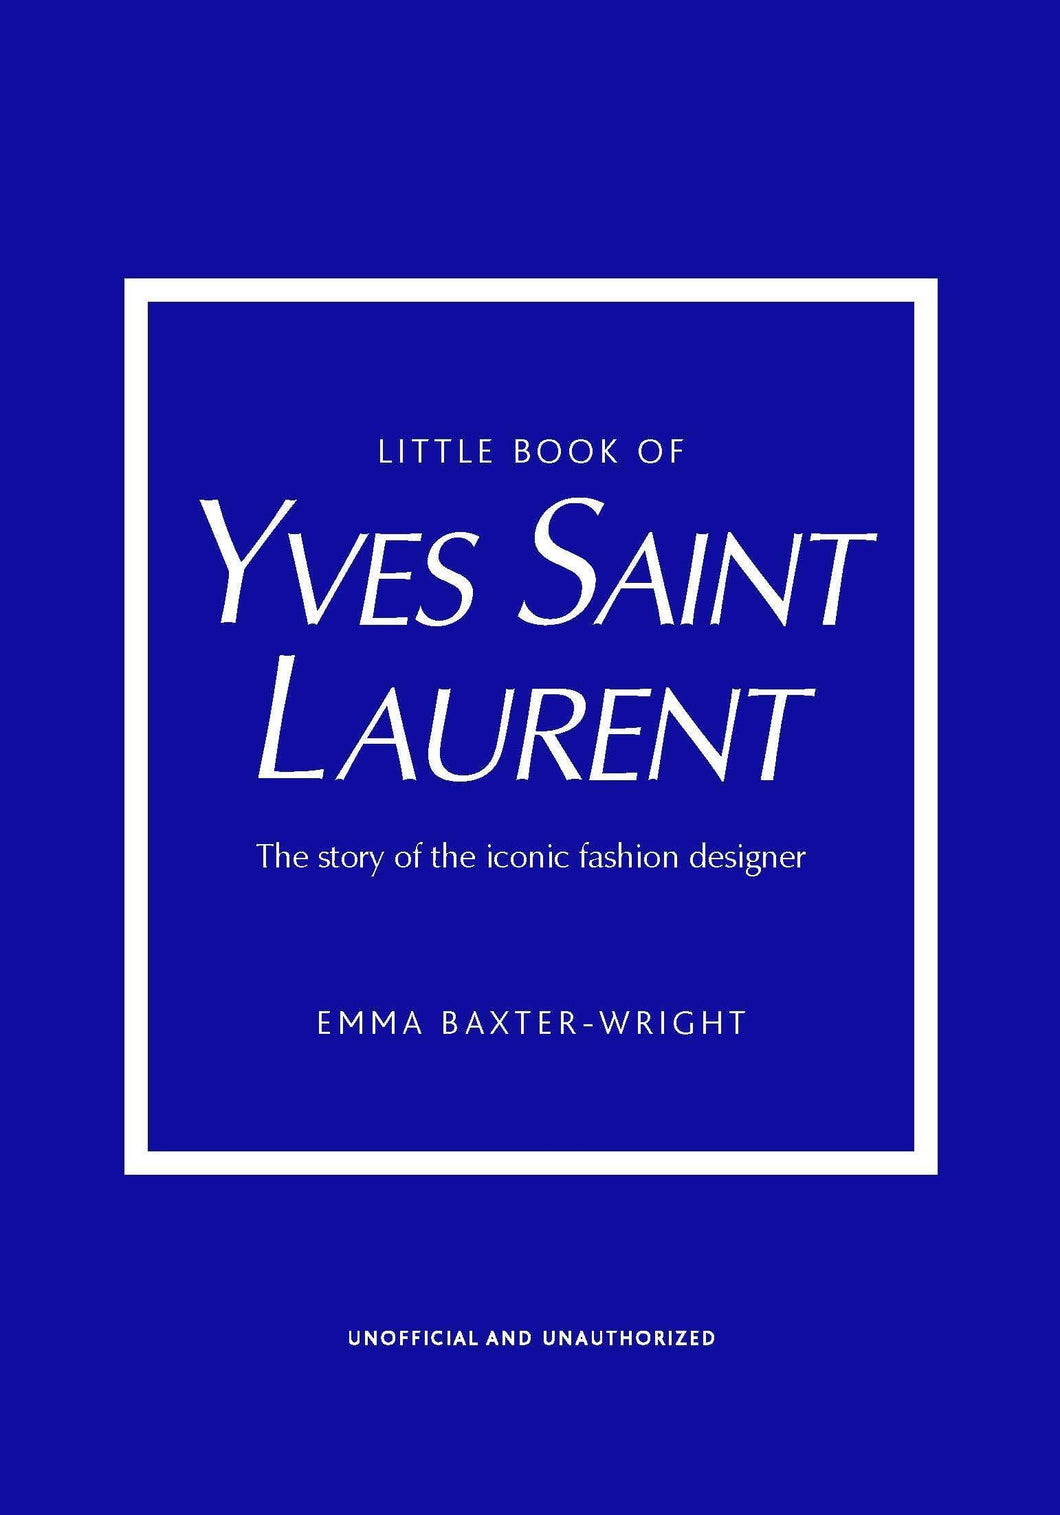 Little Books of Fashion 2: Yves Saint Laurent